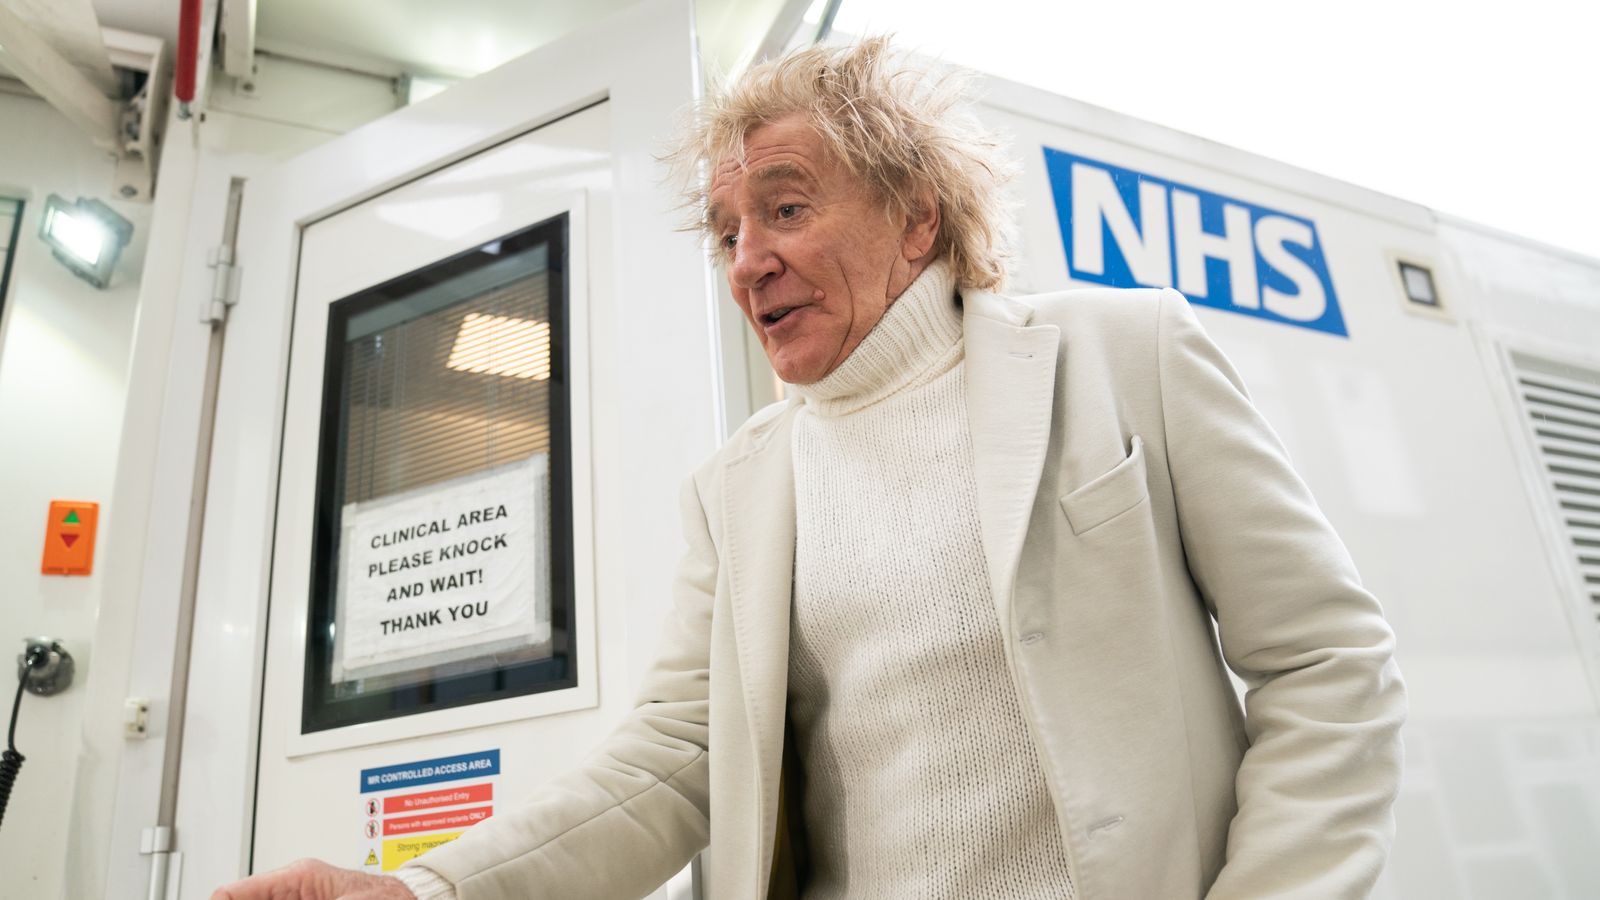 Sir Rod Stewart struggling to arrange more free MRI scans, saying he 'can't get any response'